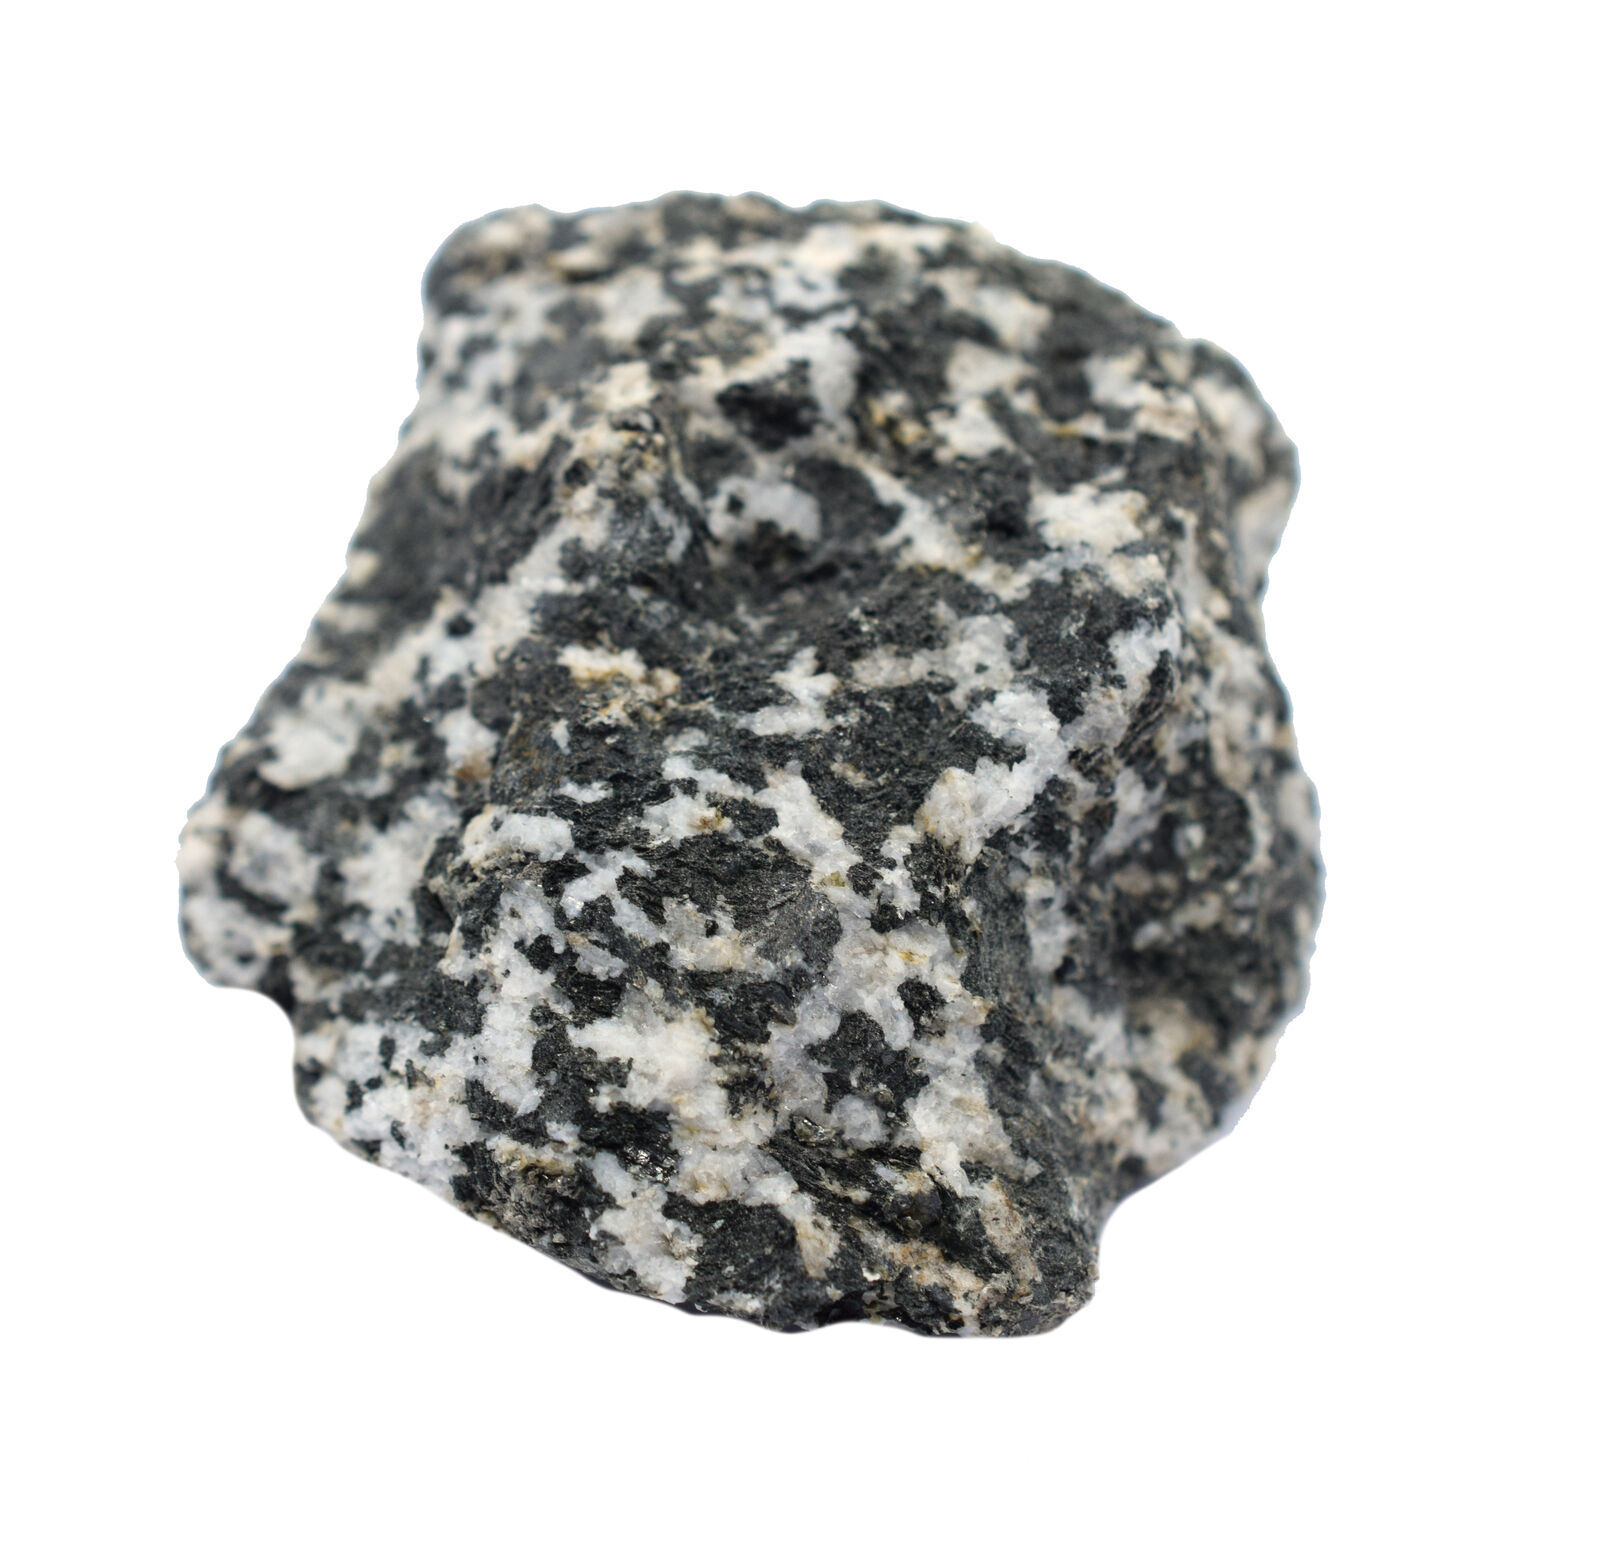 Raw Diorite Igneous Rock Specimen, 1